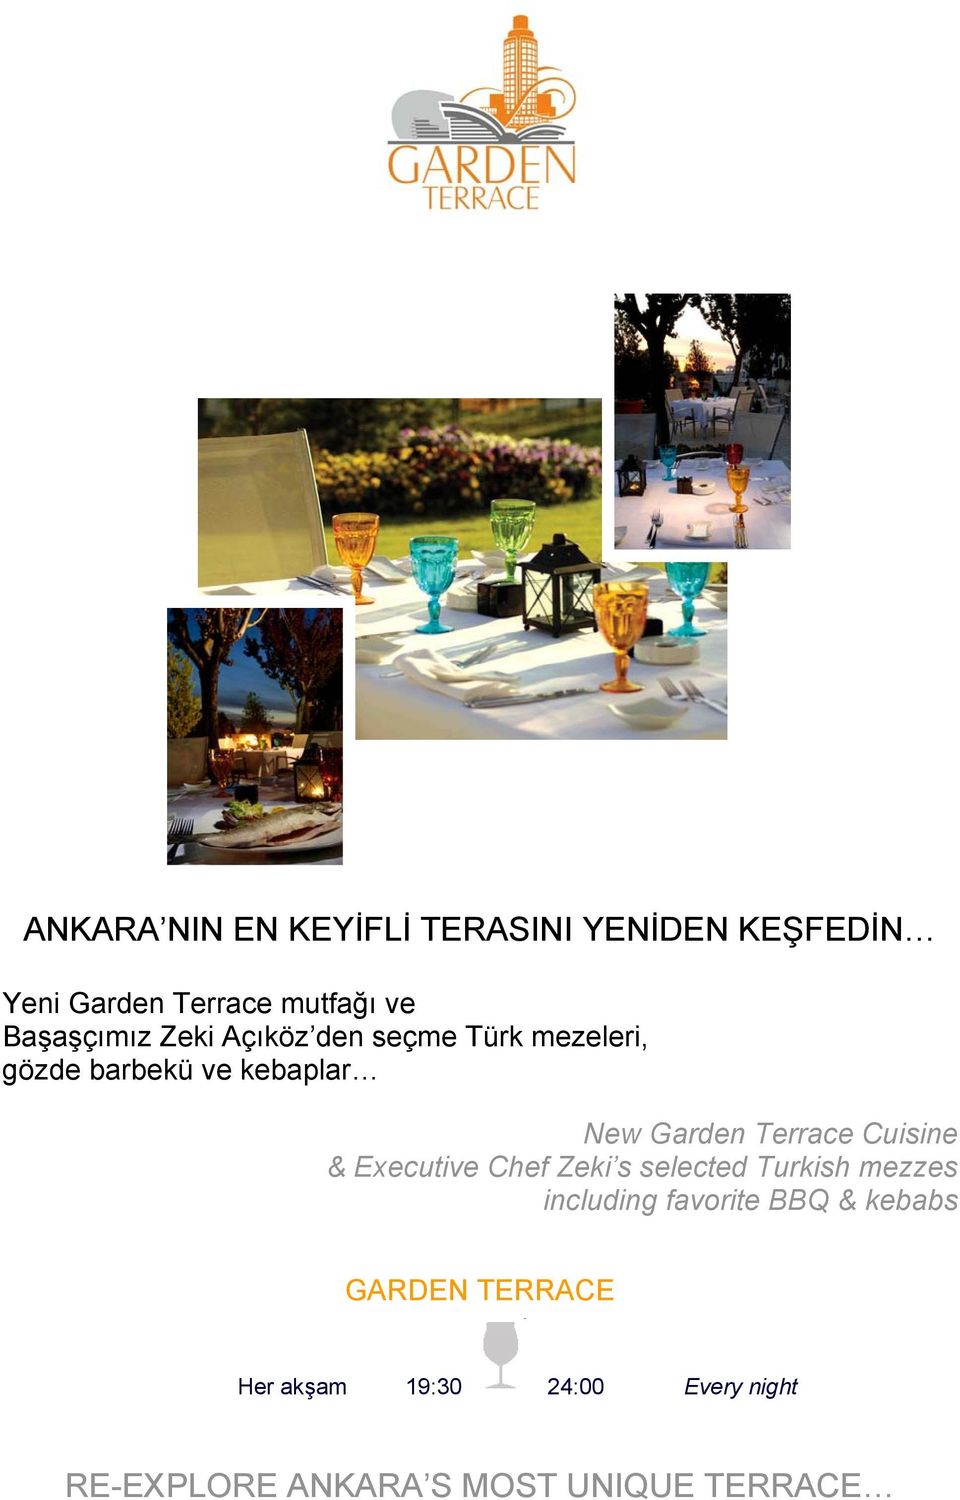 Terrace Cuisine & Executive Chef Zeki s selected Turkish mezzes including favorite BBQ